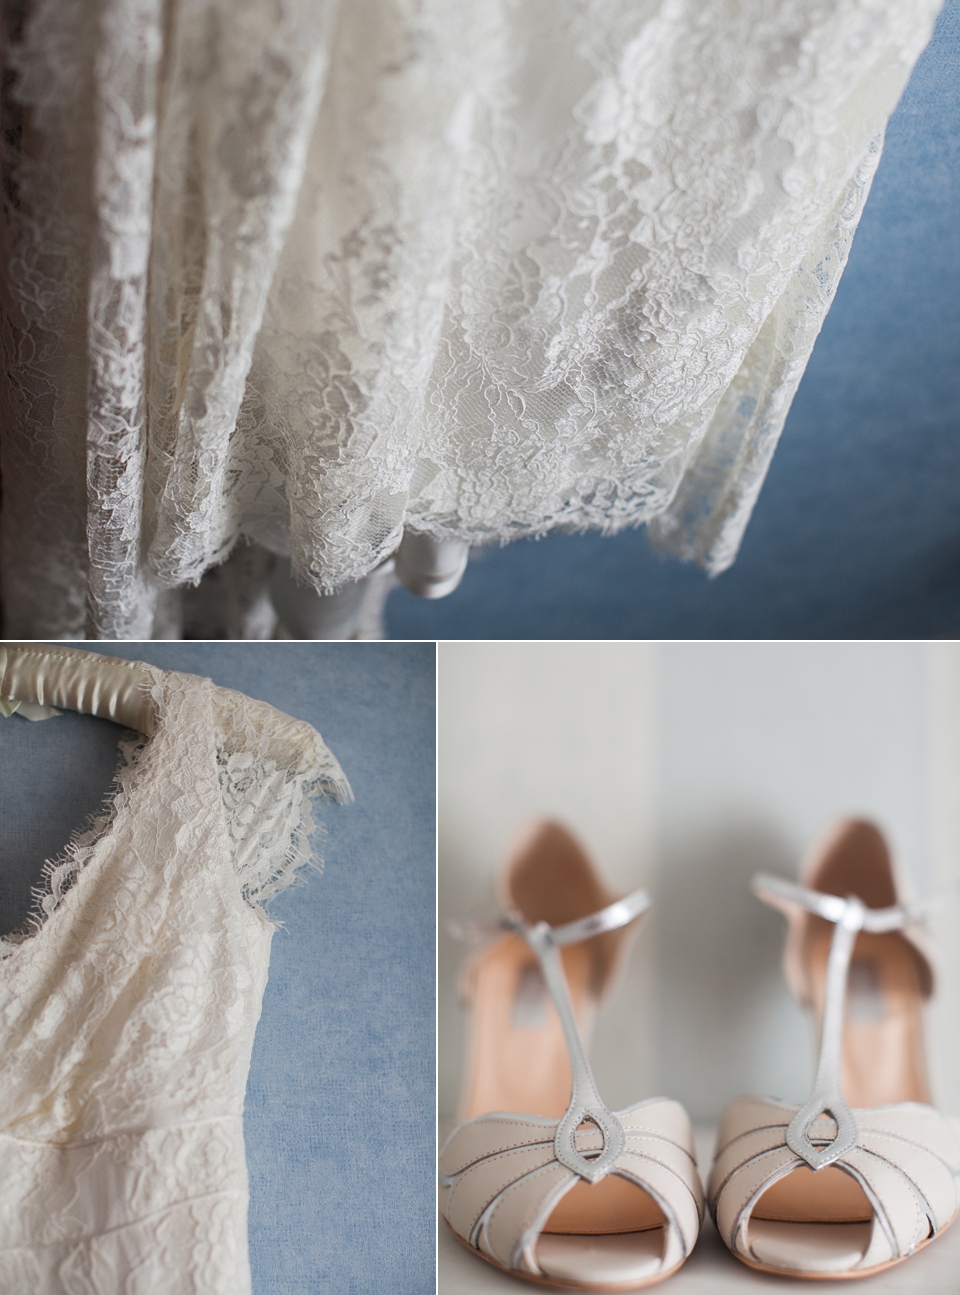 Beau Monde wedding dress, Rachel Simpson wedding shoes_0445